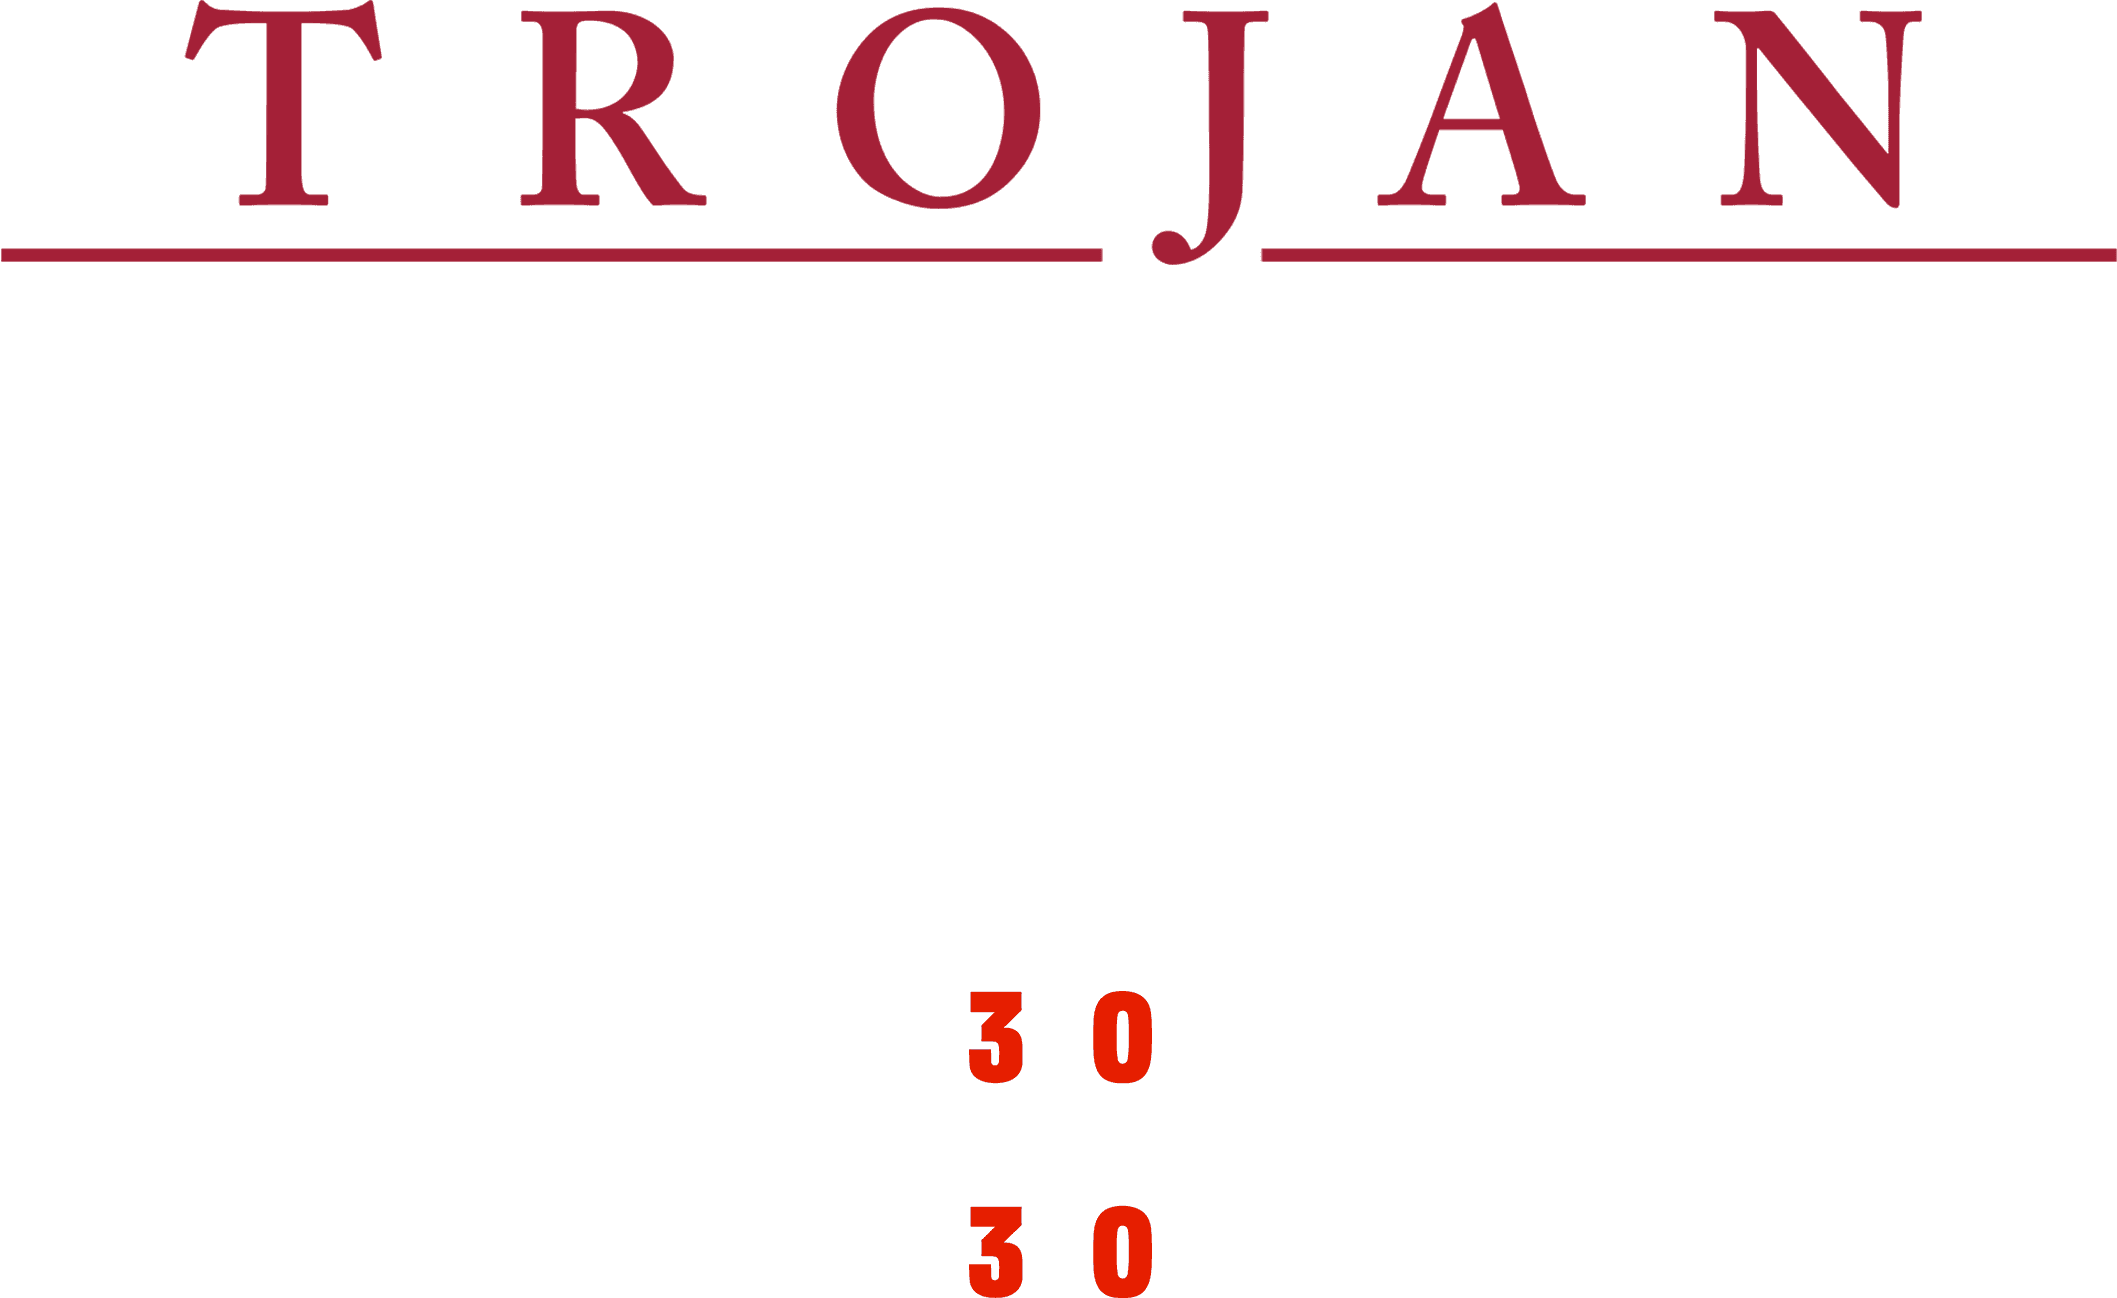 Trojan War logo